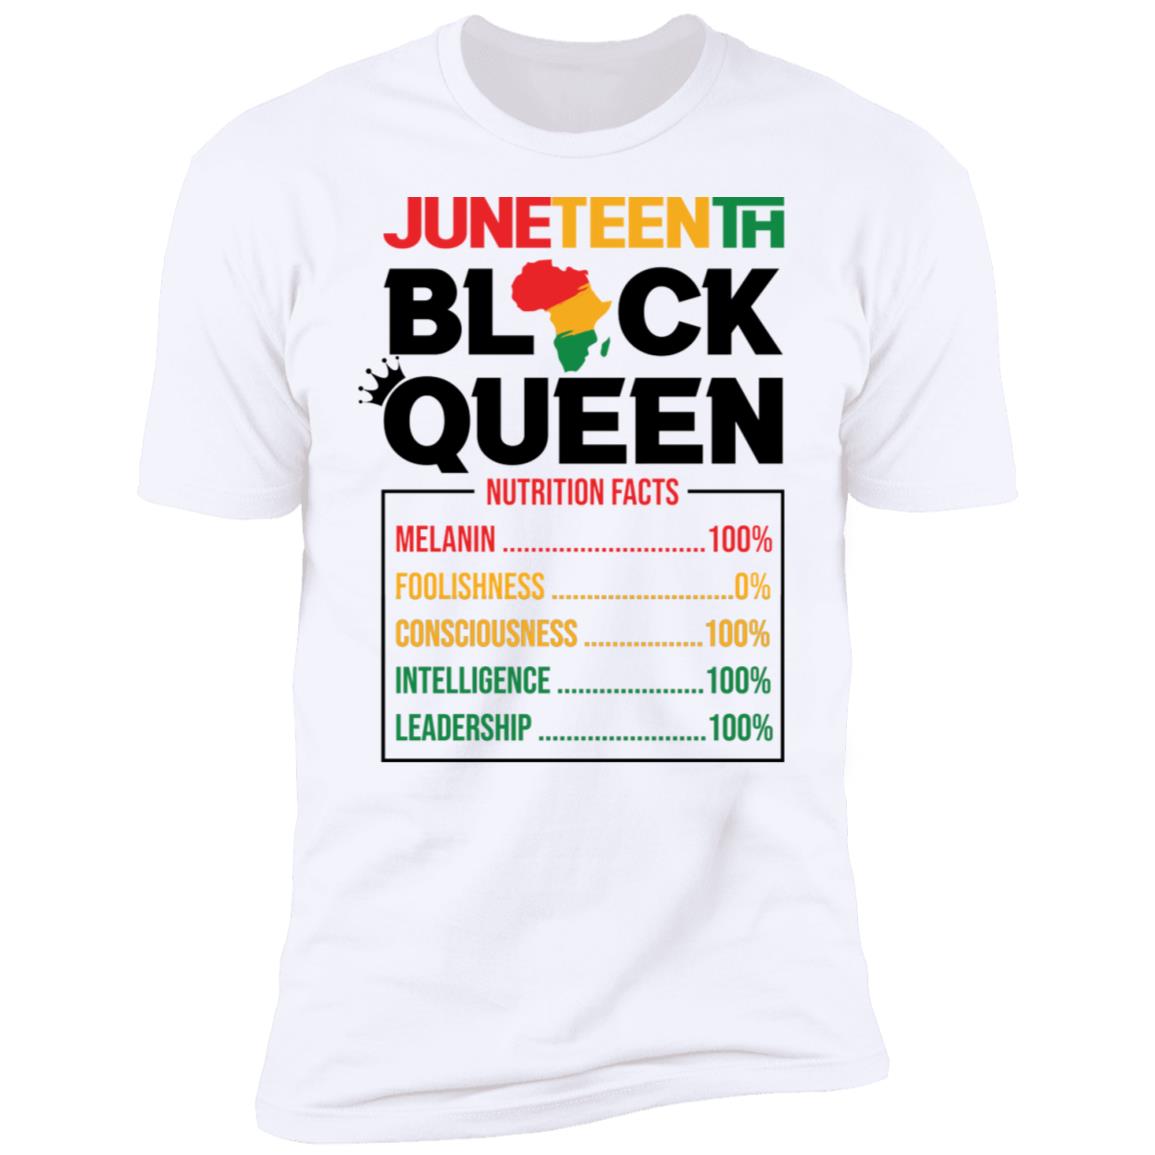 Juneteenth Black Queen Nutrition Facts T-shirt Apparel Gearment Premium T-Shirt White S